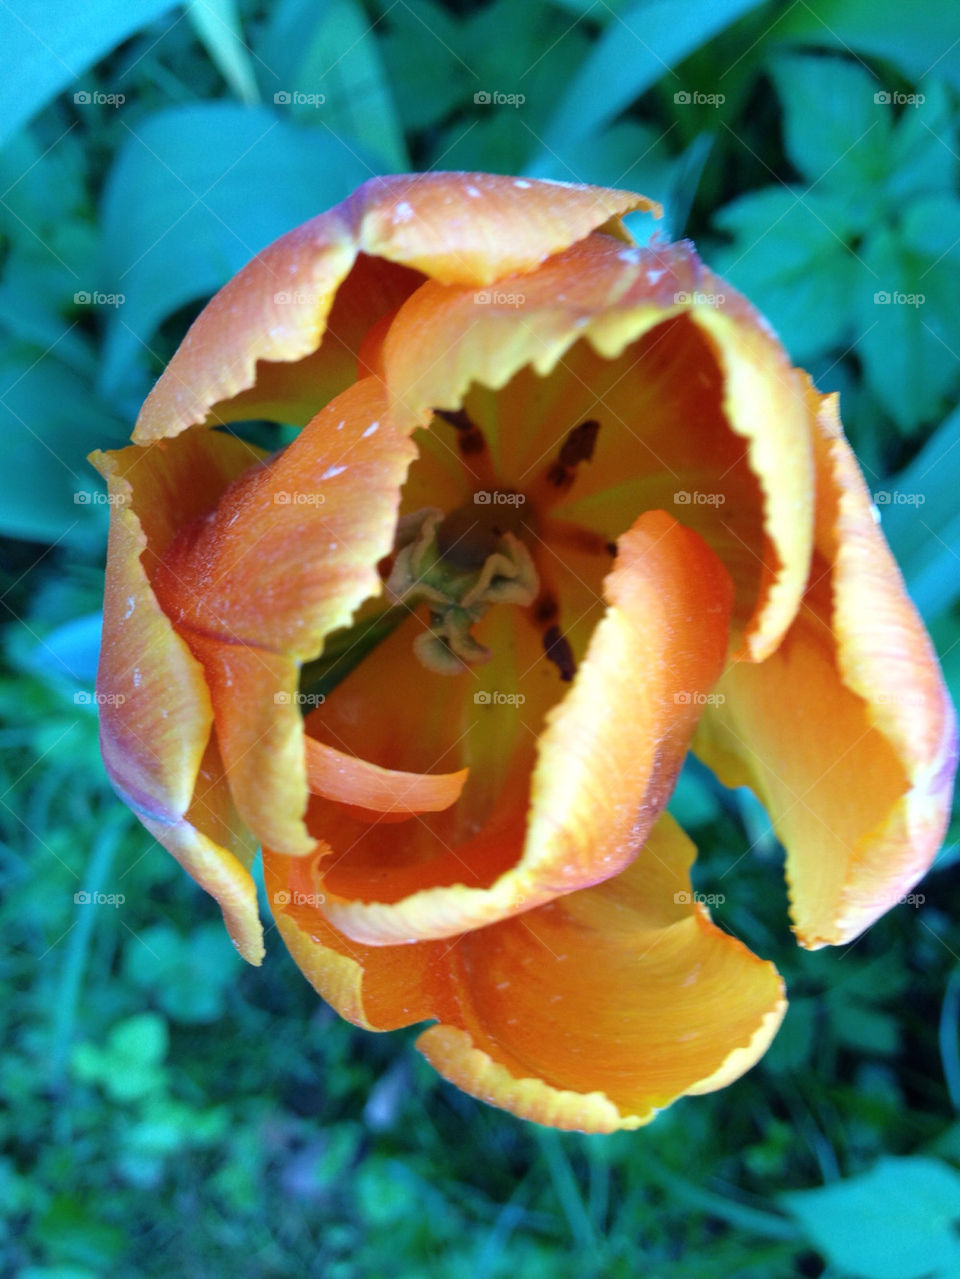 flower orange tulip by sandborgskan